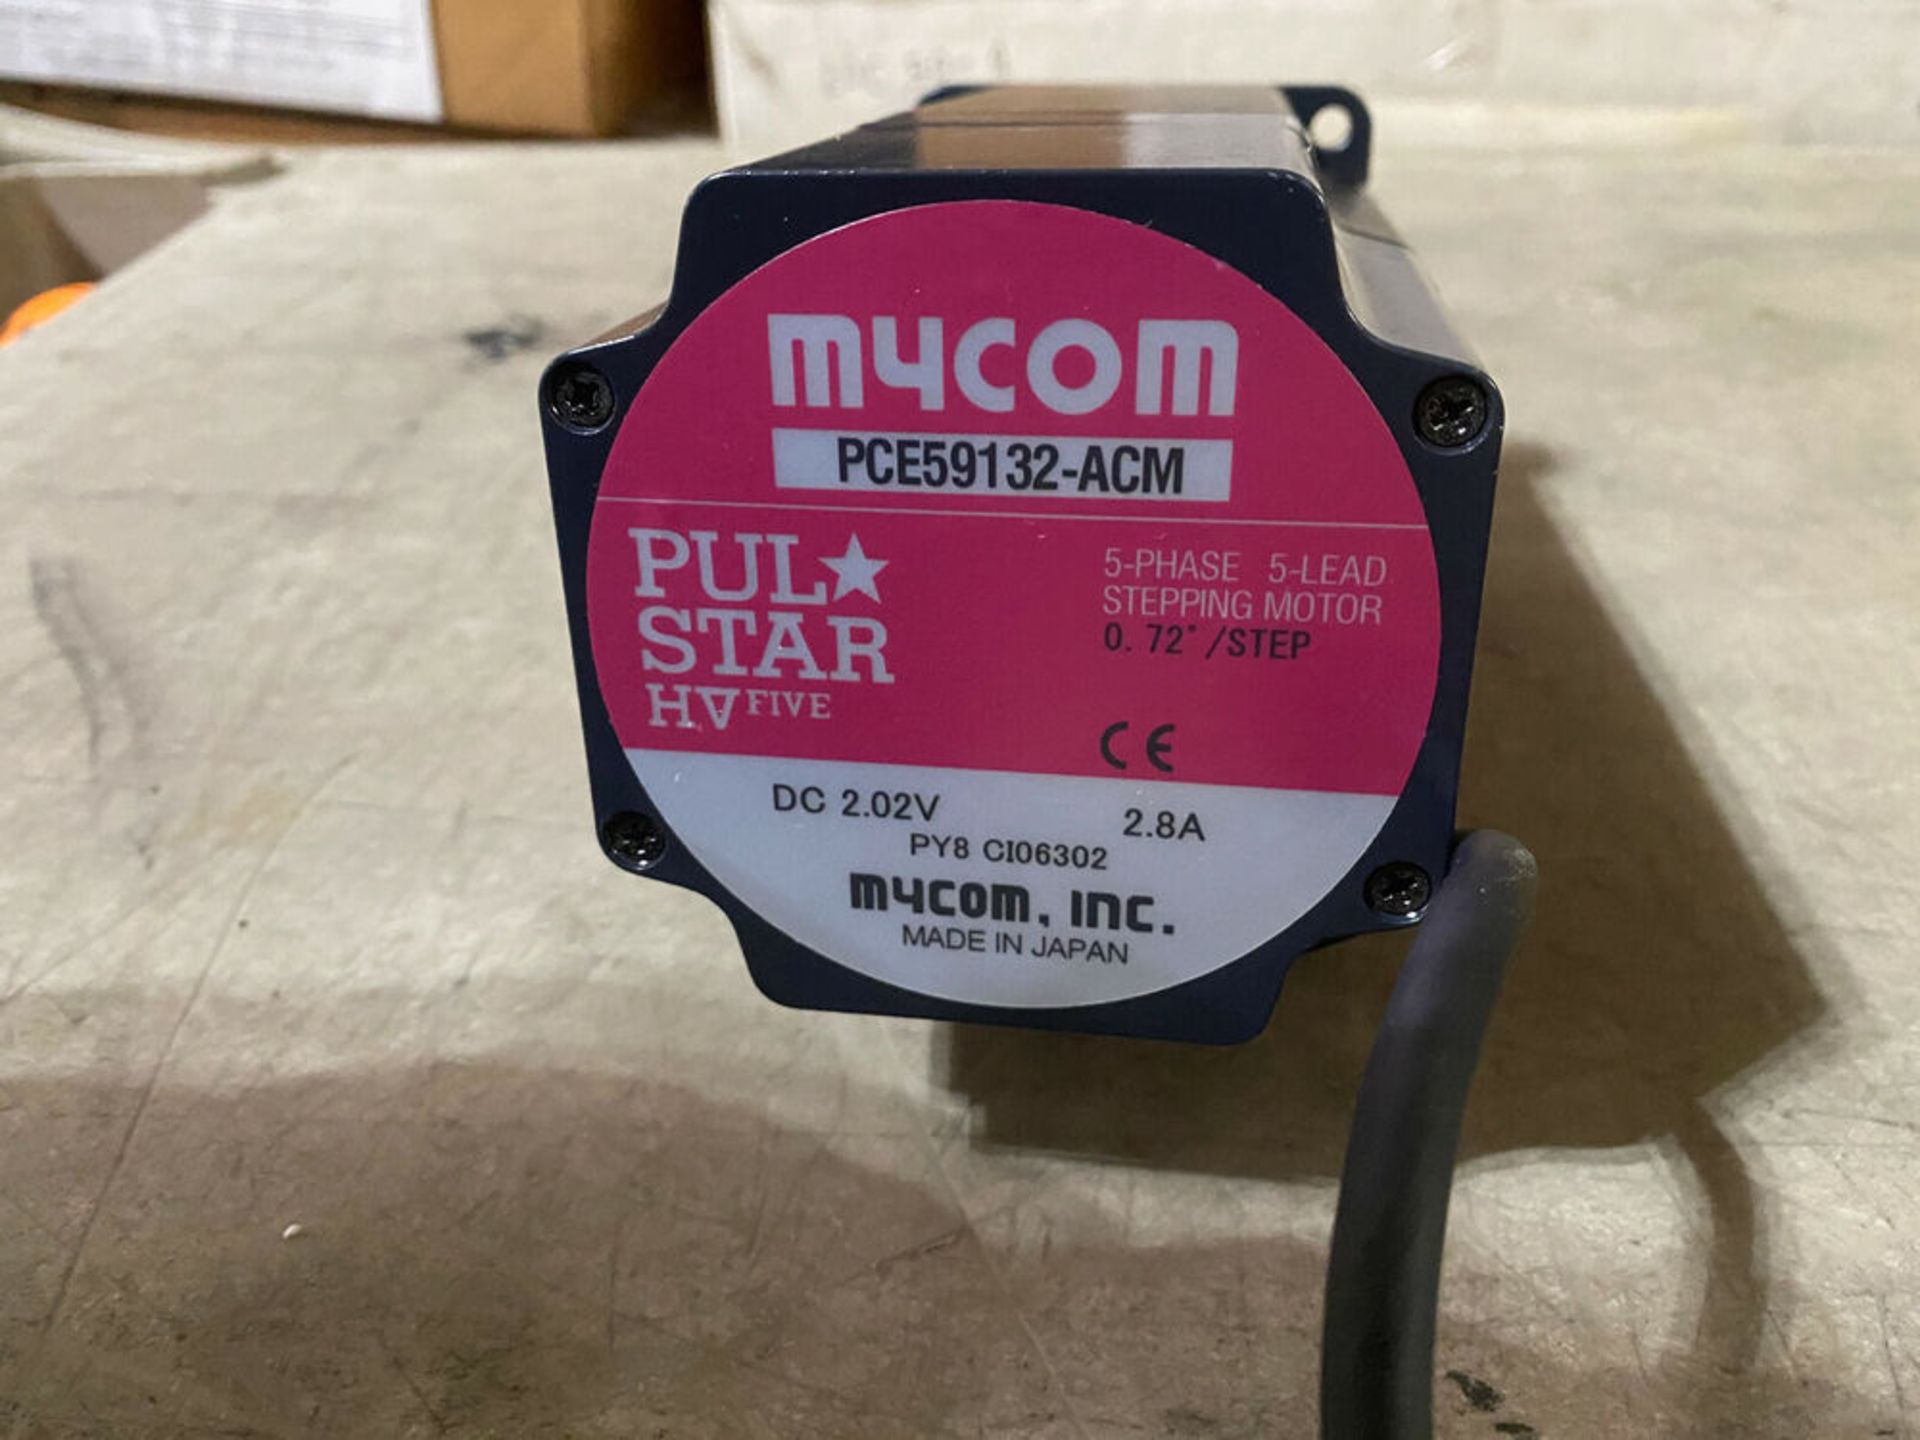 Mycom PCE59132-ACM PUL STAR HV FIVE 5 Phase 5 Lead Stepping Motor - Stepper